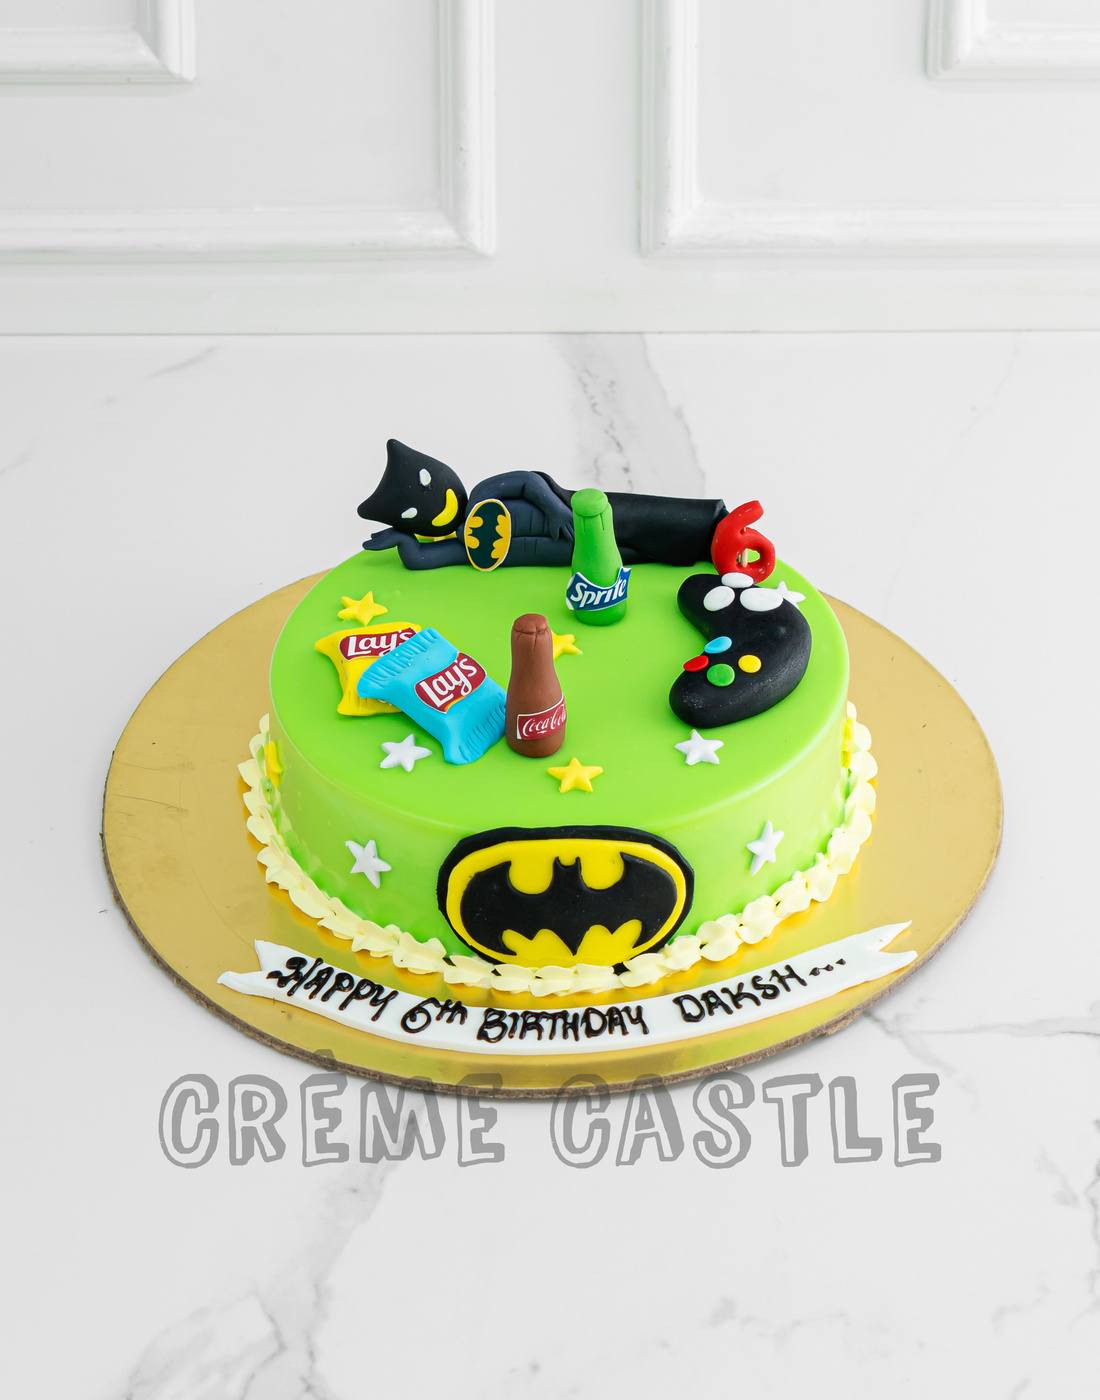 Capital Cake Co. - Batman Birthday Cake #batman #cake #birthday #dccomics |  Facebook